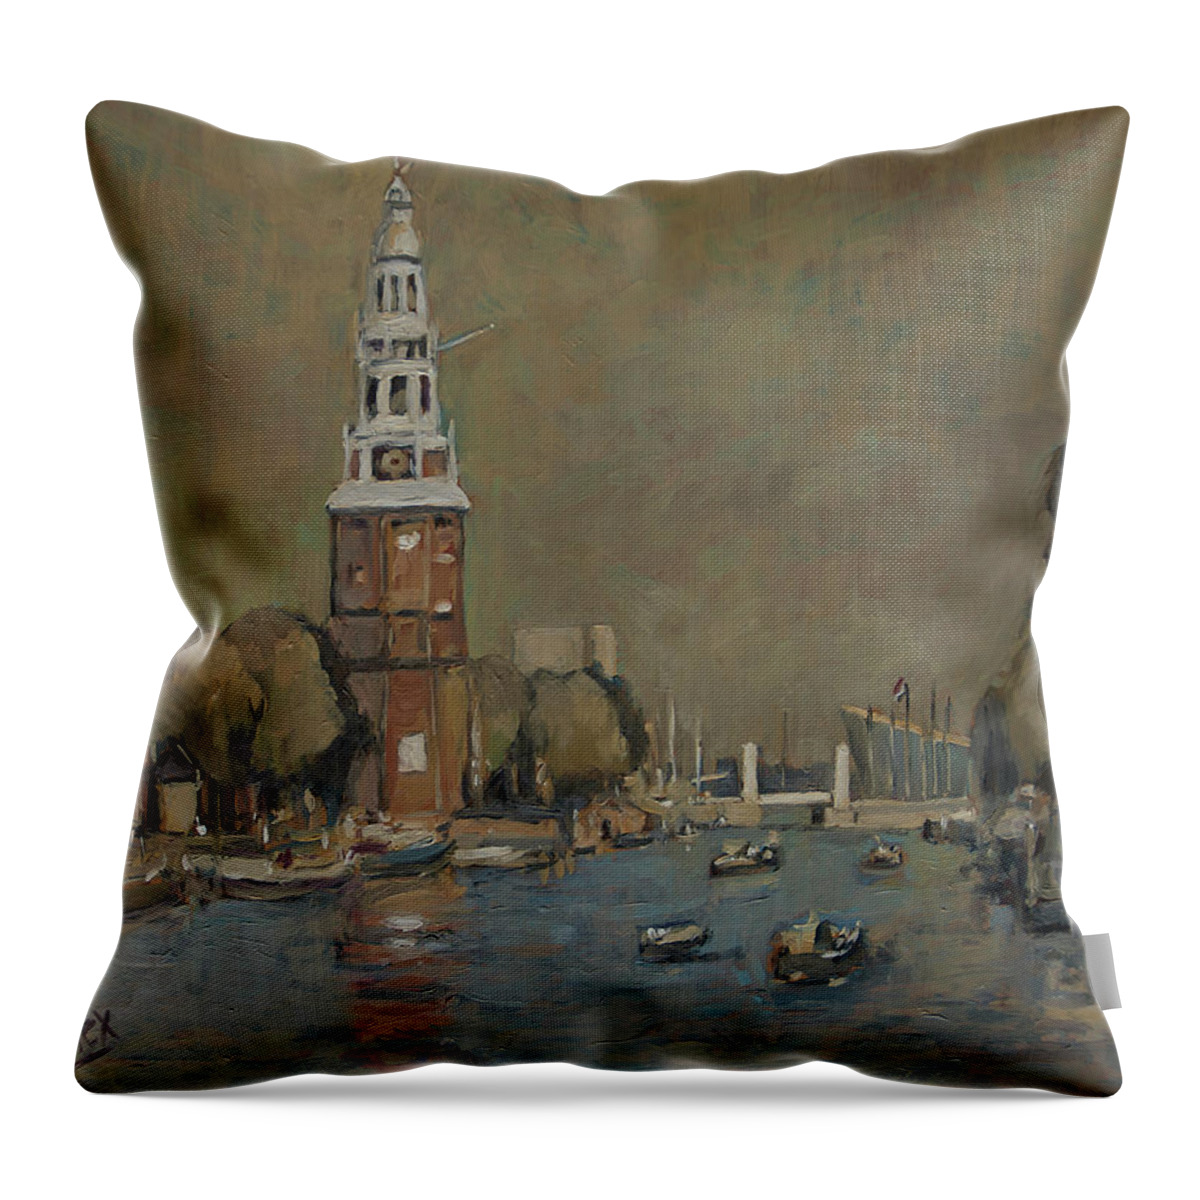 Montelbaanstoren Throw Pillow featuring the painting Montelbaanstoren Amsterdam by Nop Briex